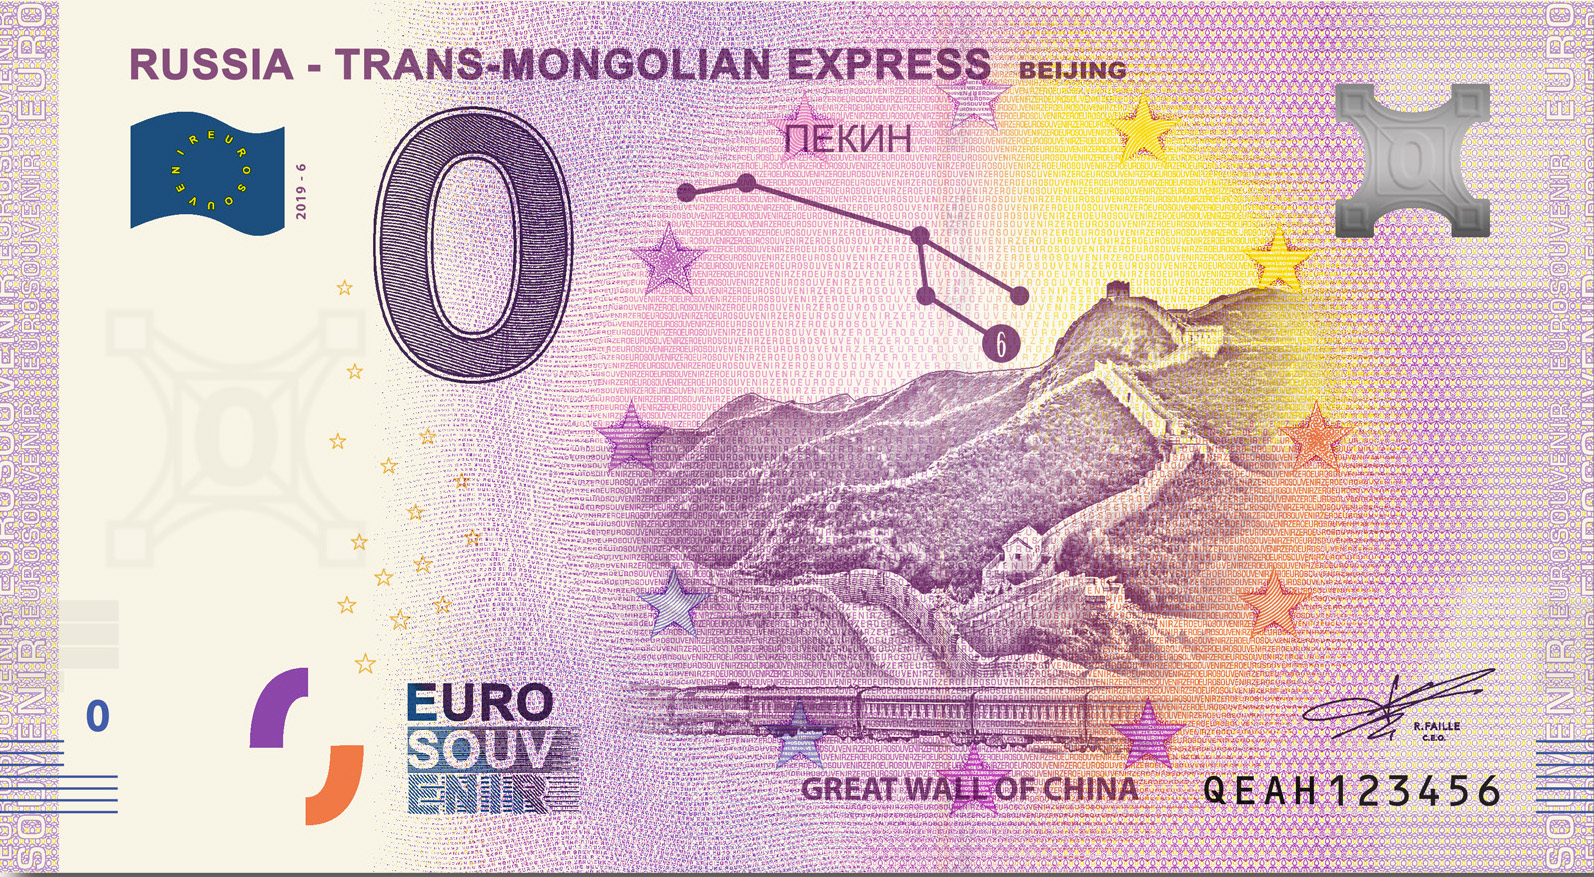 0 Euro souvenir note Rusland 2020 - Trans-Mongolian Express Beijing